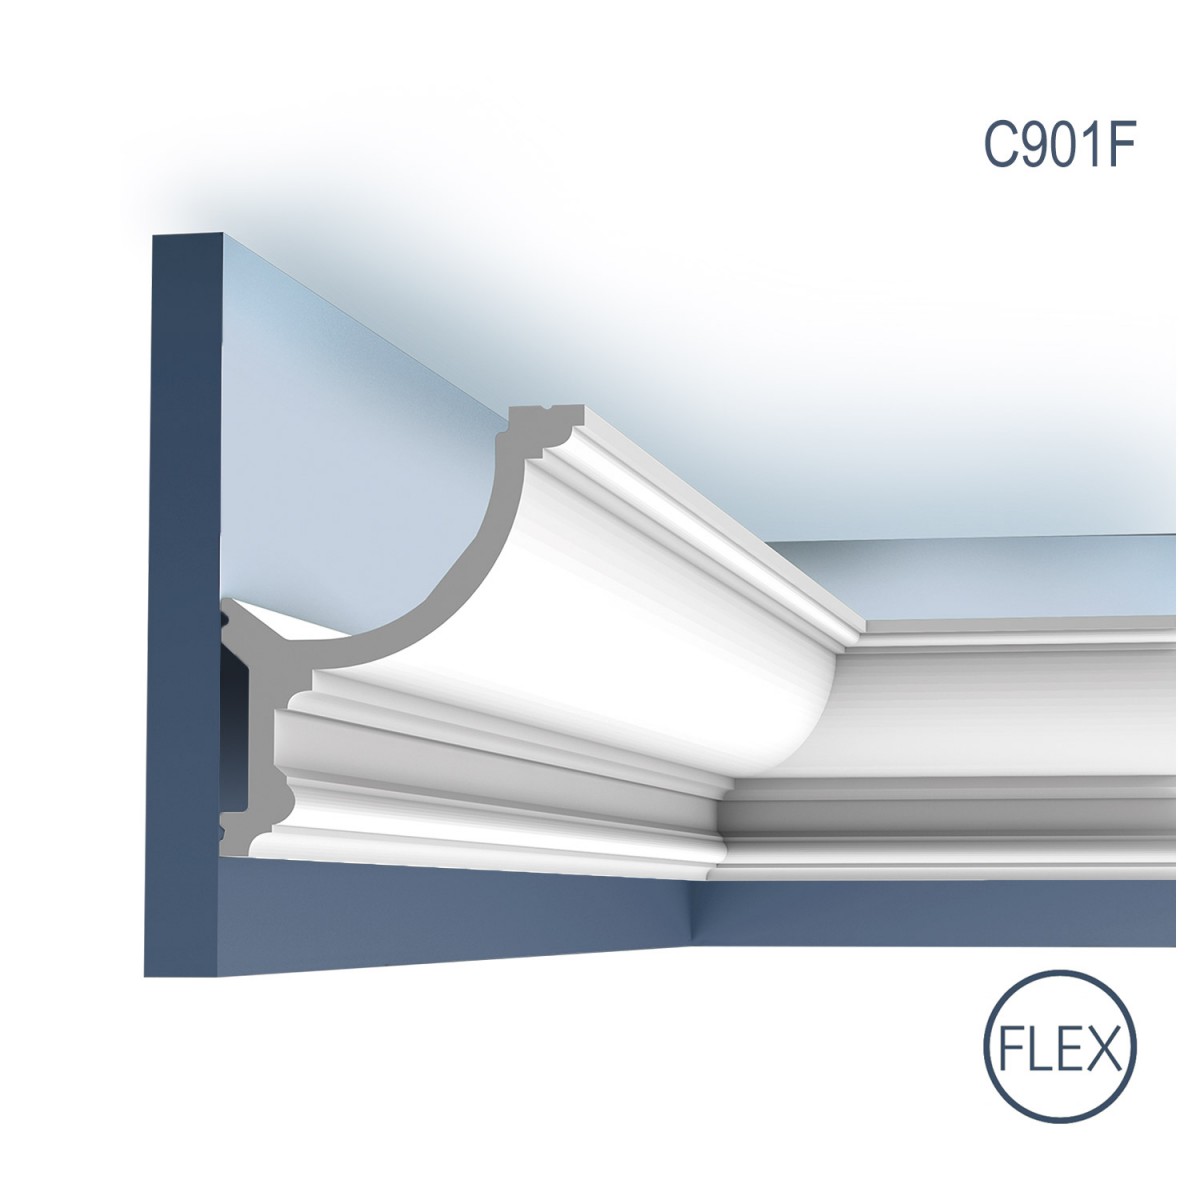 Scafe tavan (iluminat indirect, LED) Orac Decor ORC-C901F, material: PUROTOUCH®